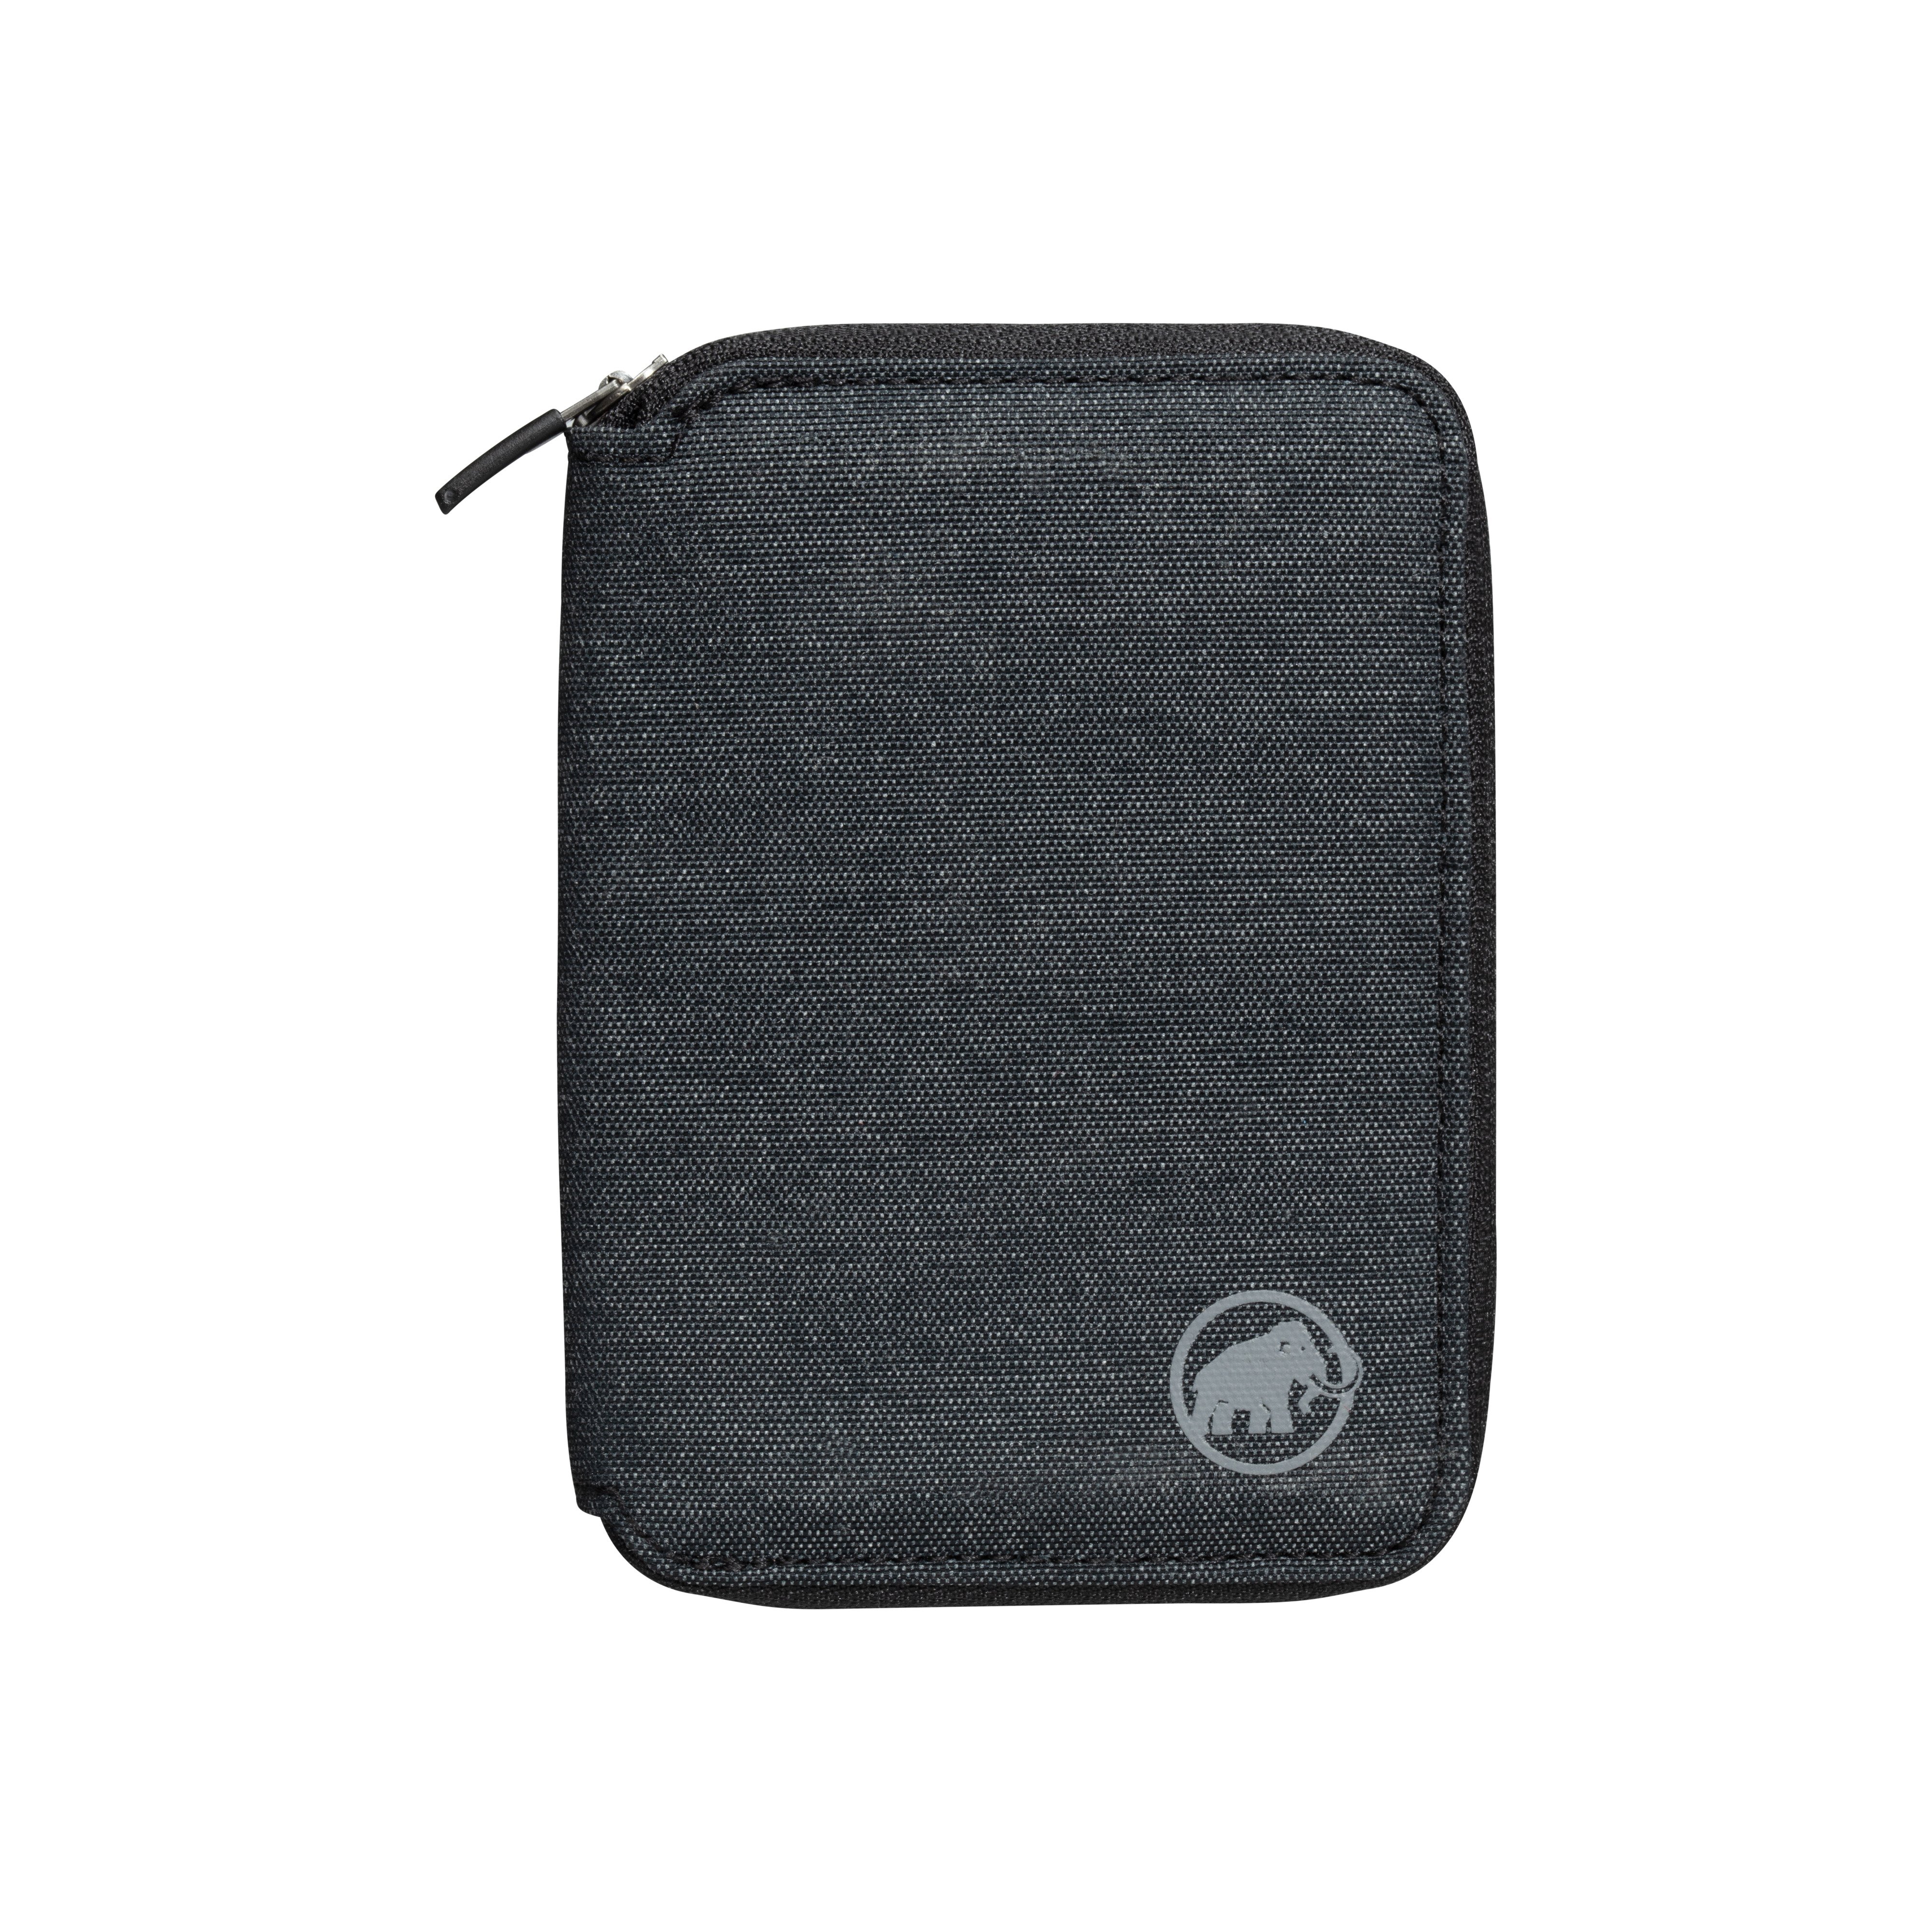 Zip Wallet MÃ©lange - black, one size product image